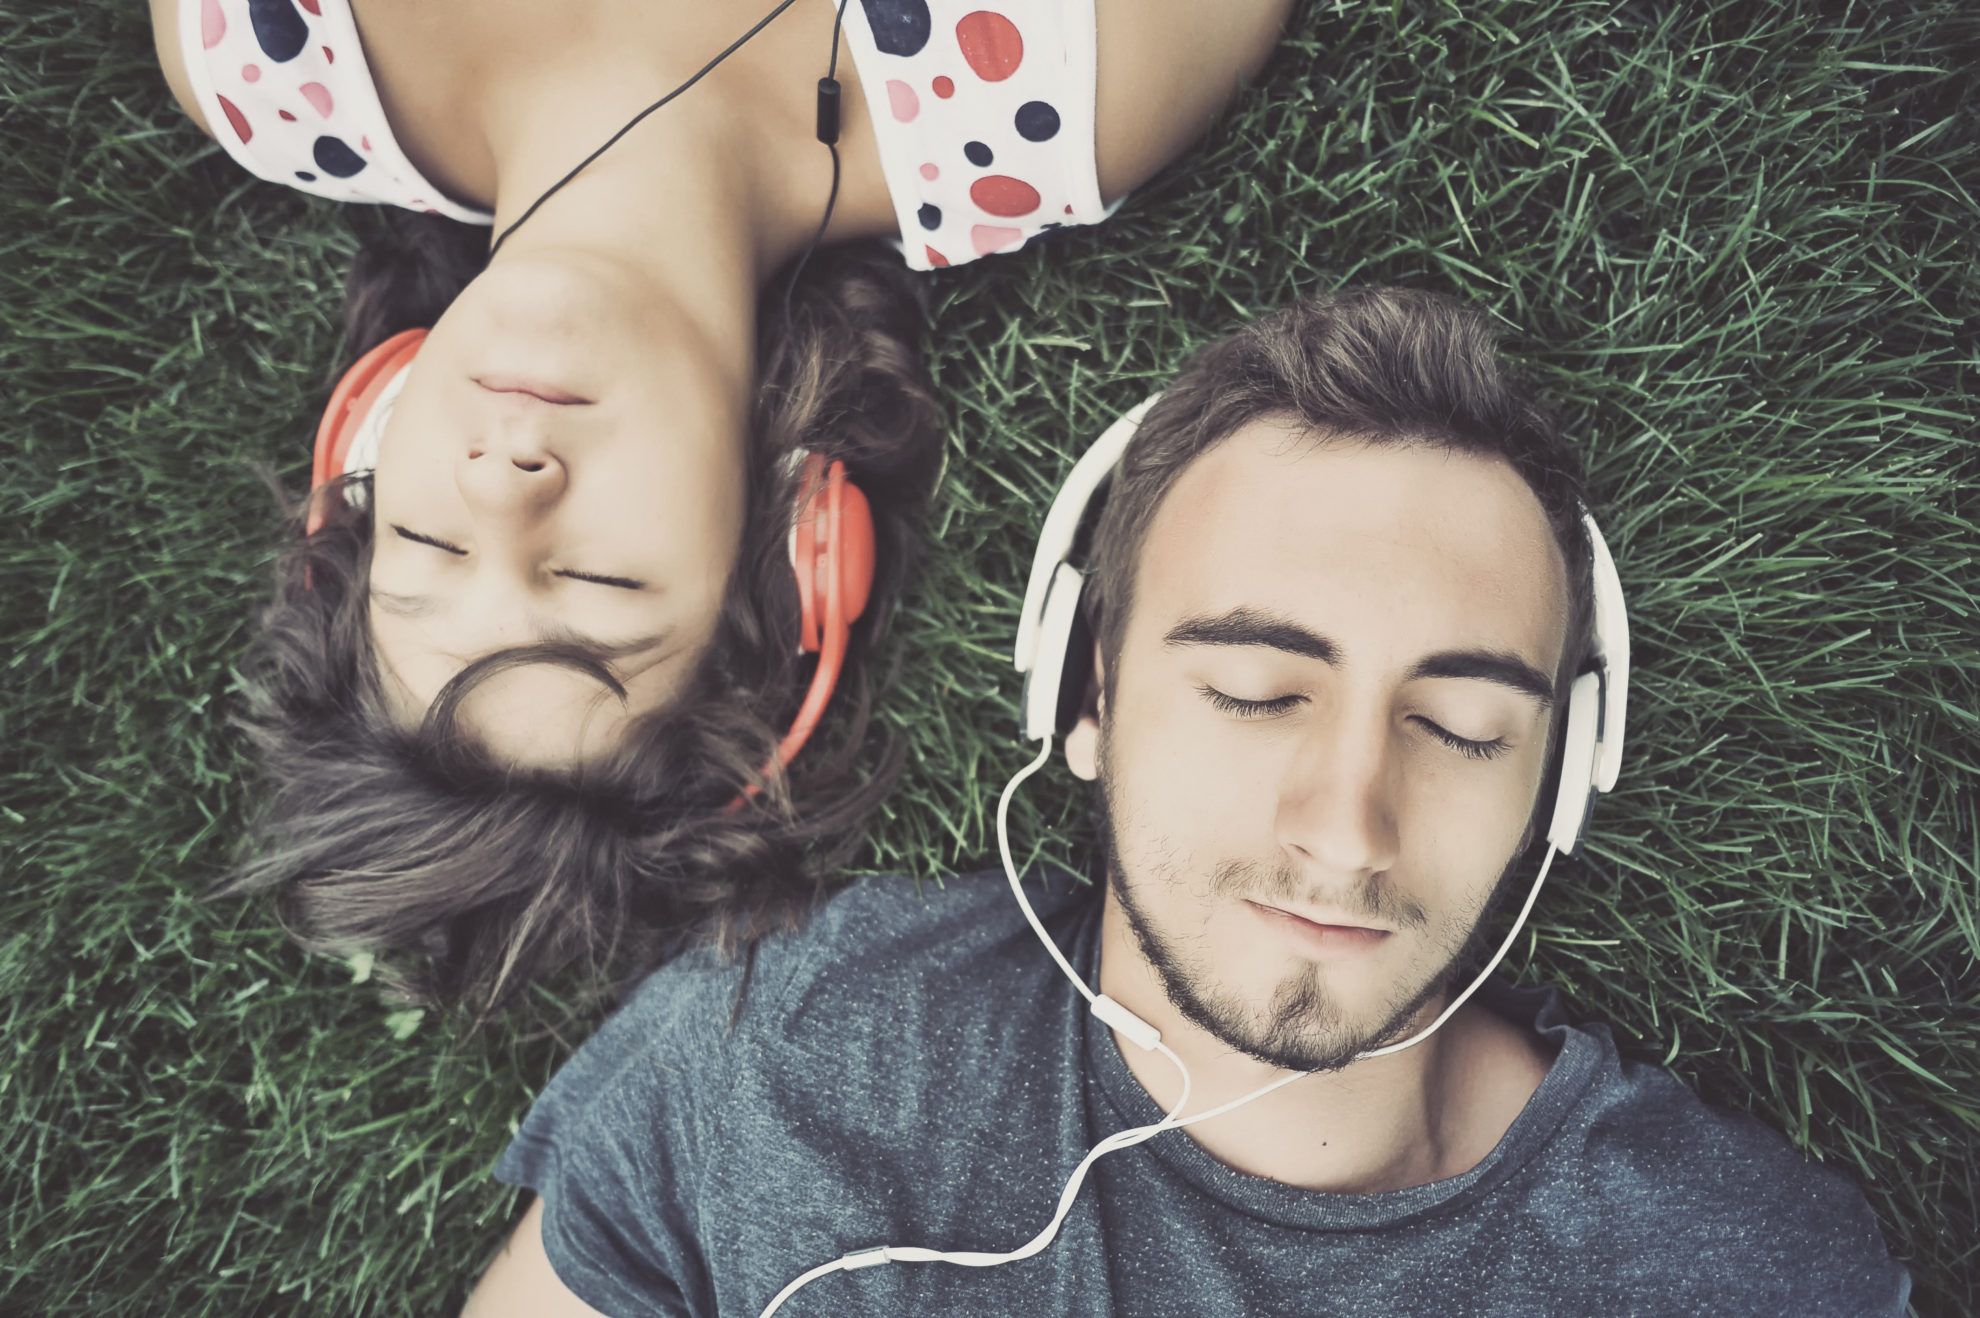 Couple listening to music on headphones